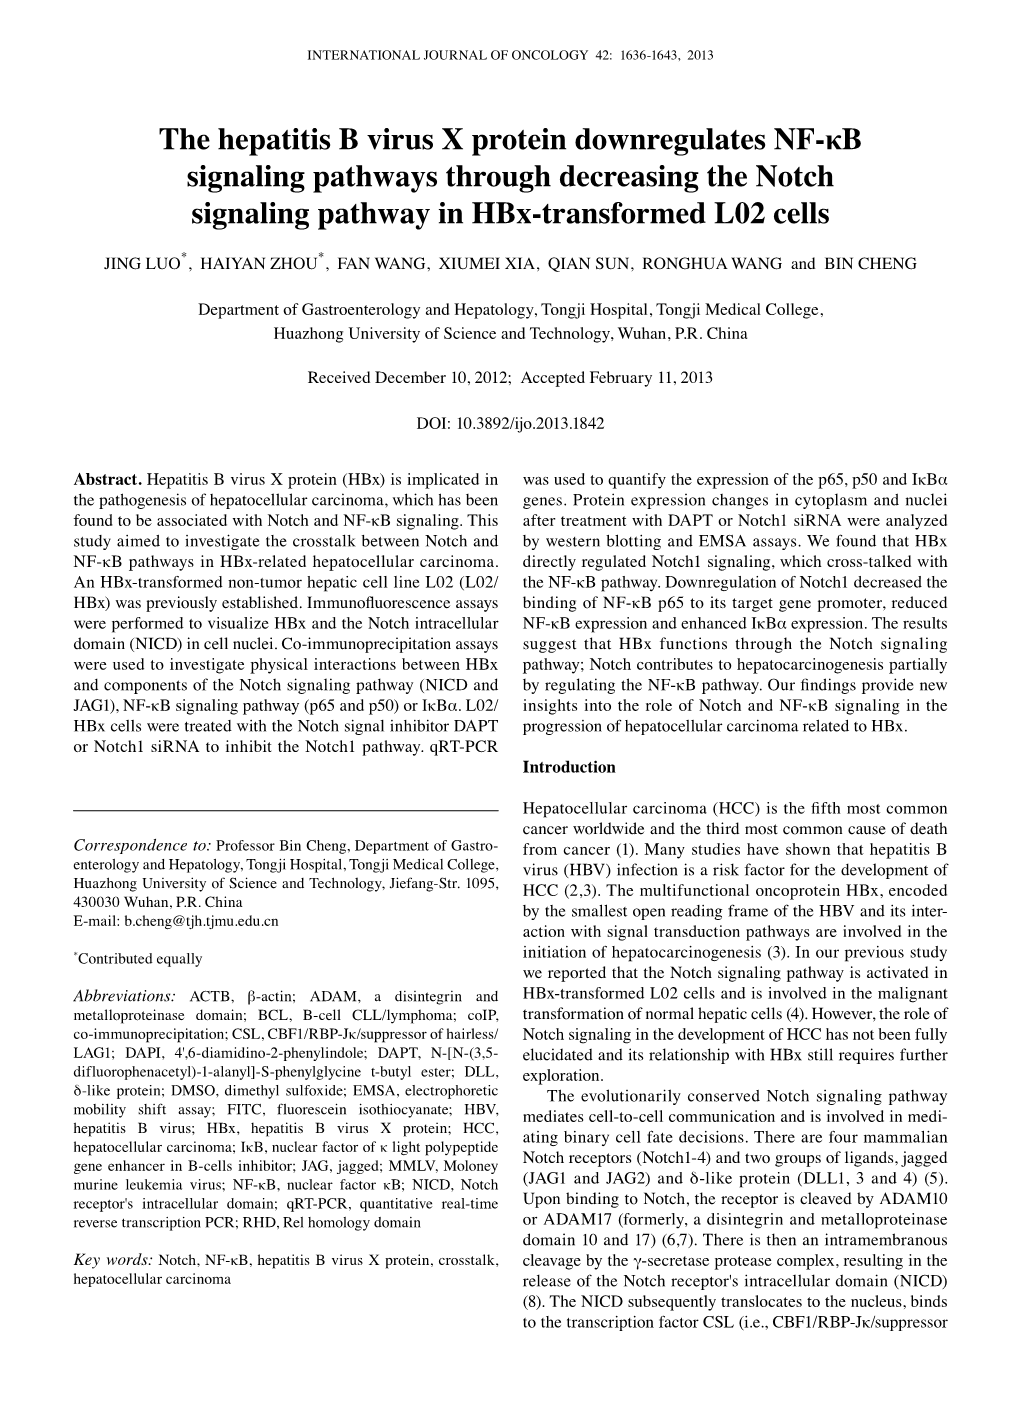 The Hepatitis B Virus X Protein Downregulates NF-Κb Signaling Pathways Through Decreasing the Notch Signaling Pathway in Hbx-Transformed L02 Cells